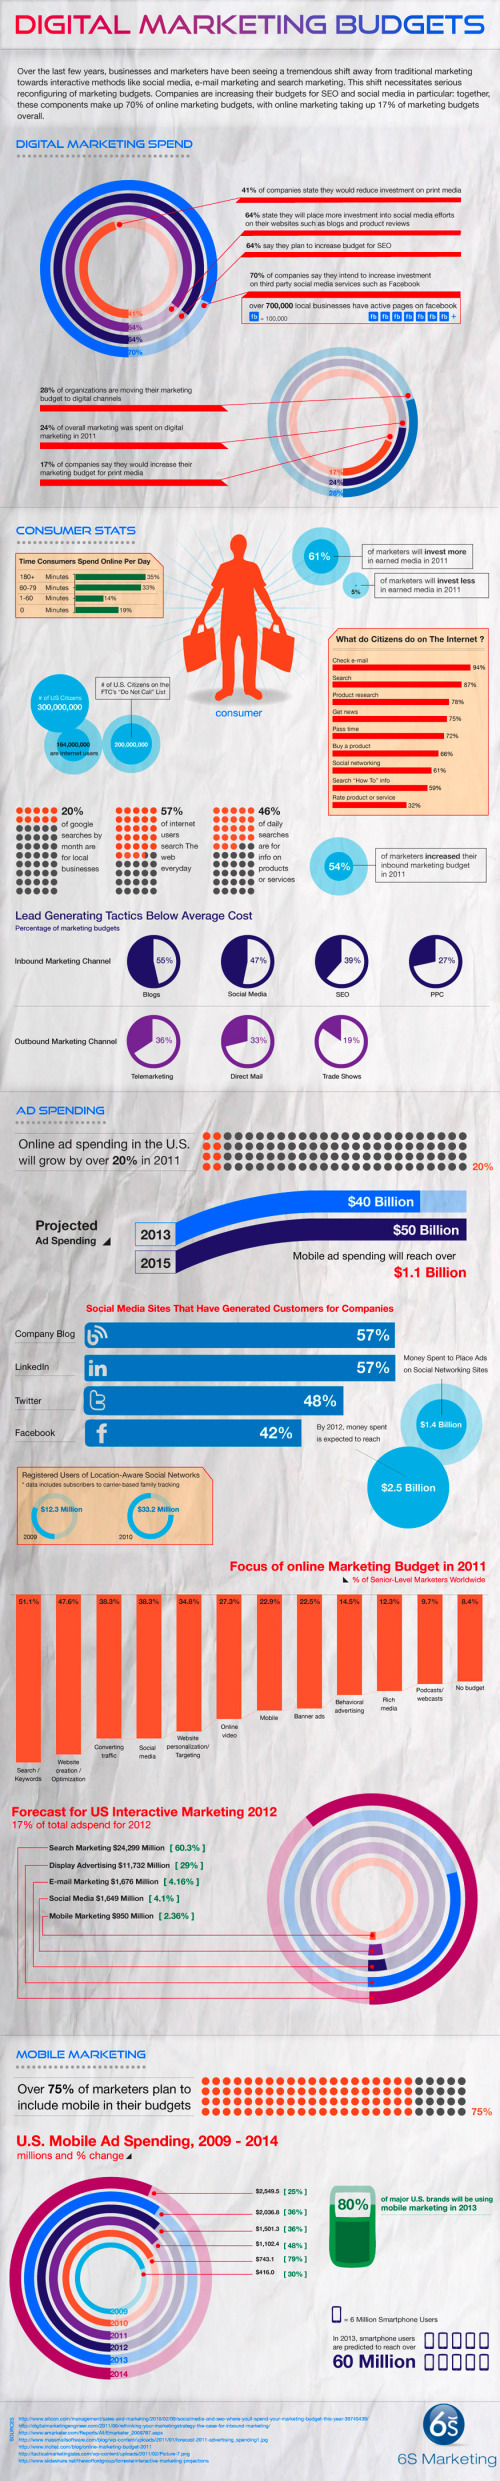 Digital Marketing Budgets infographic